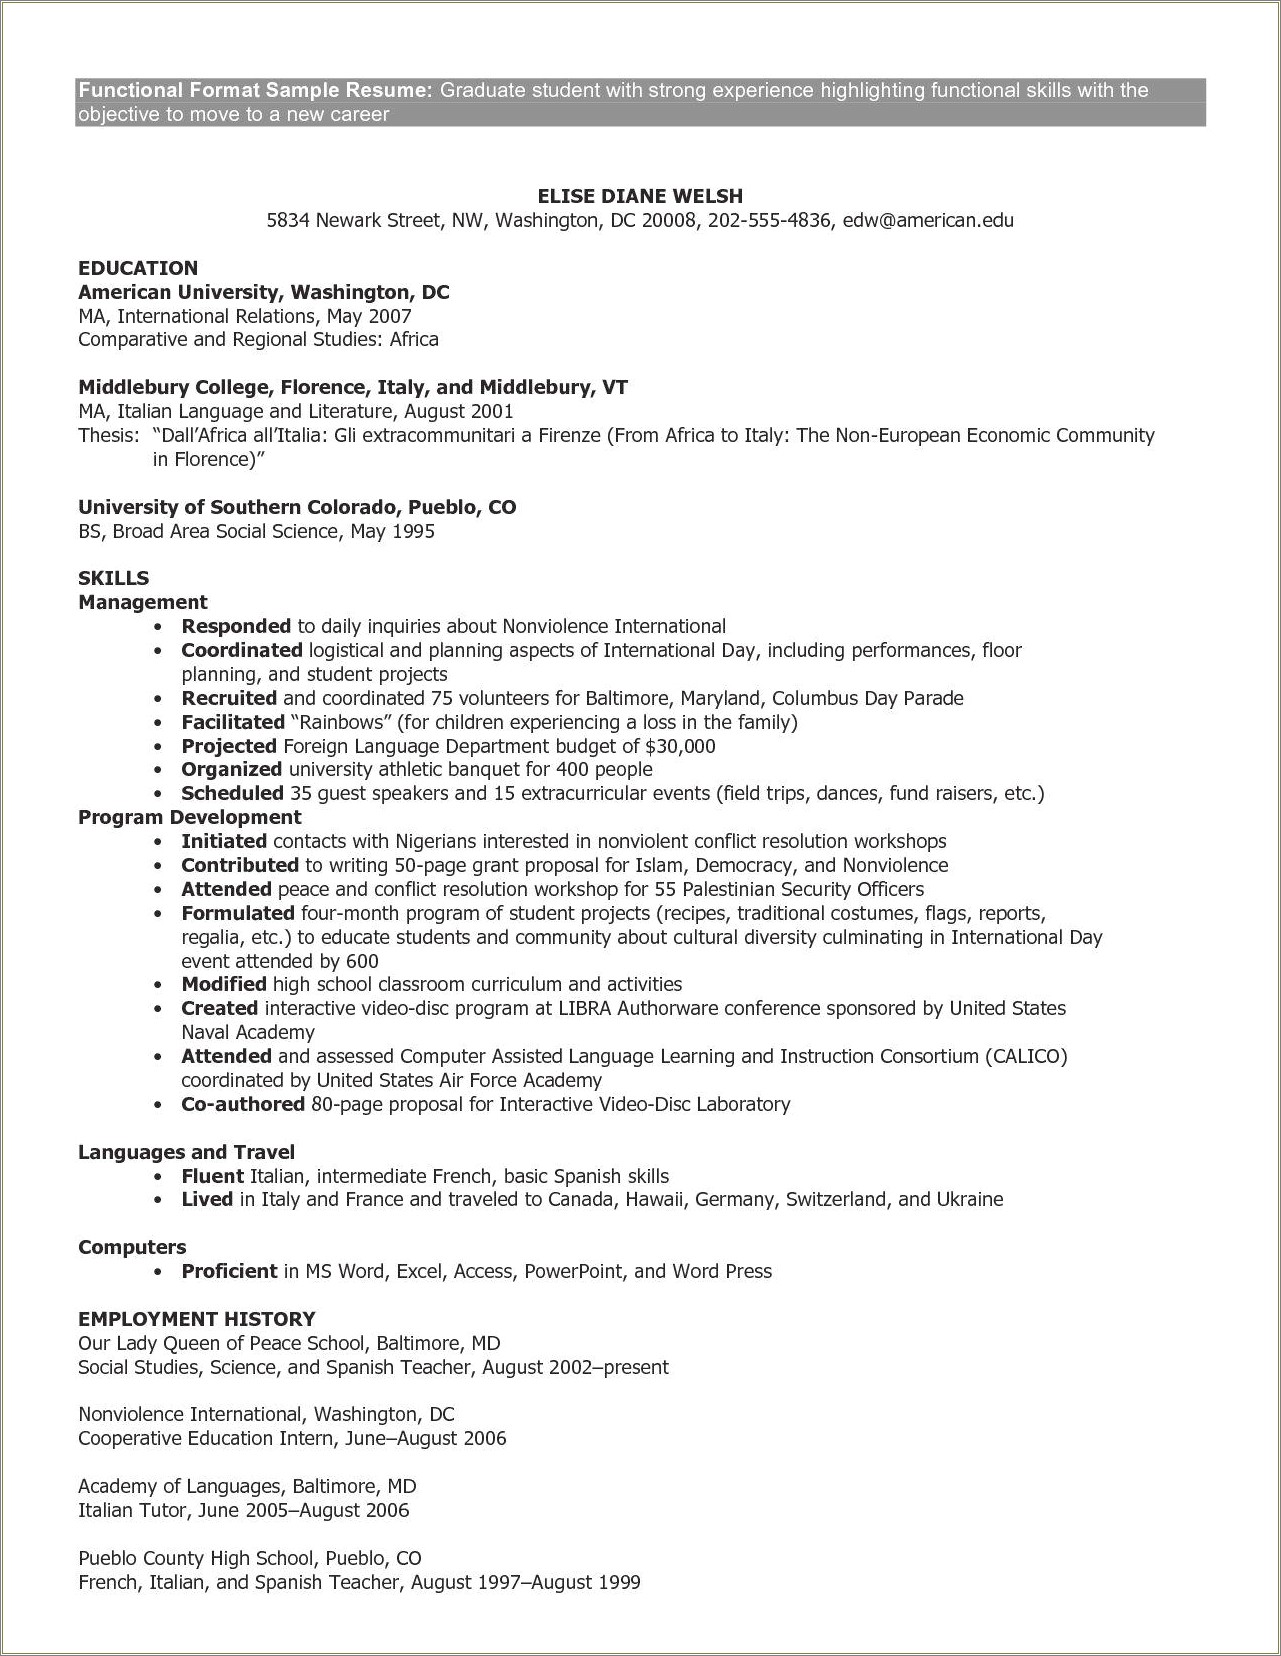 Sample Of A Resume For International Studies